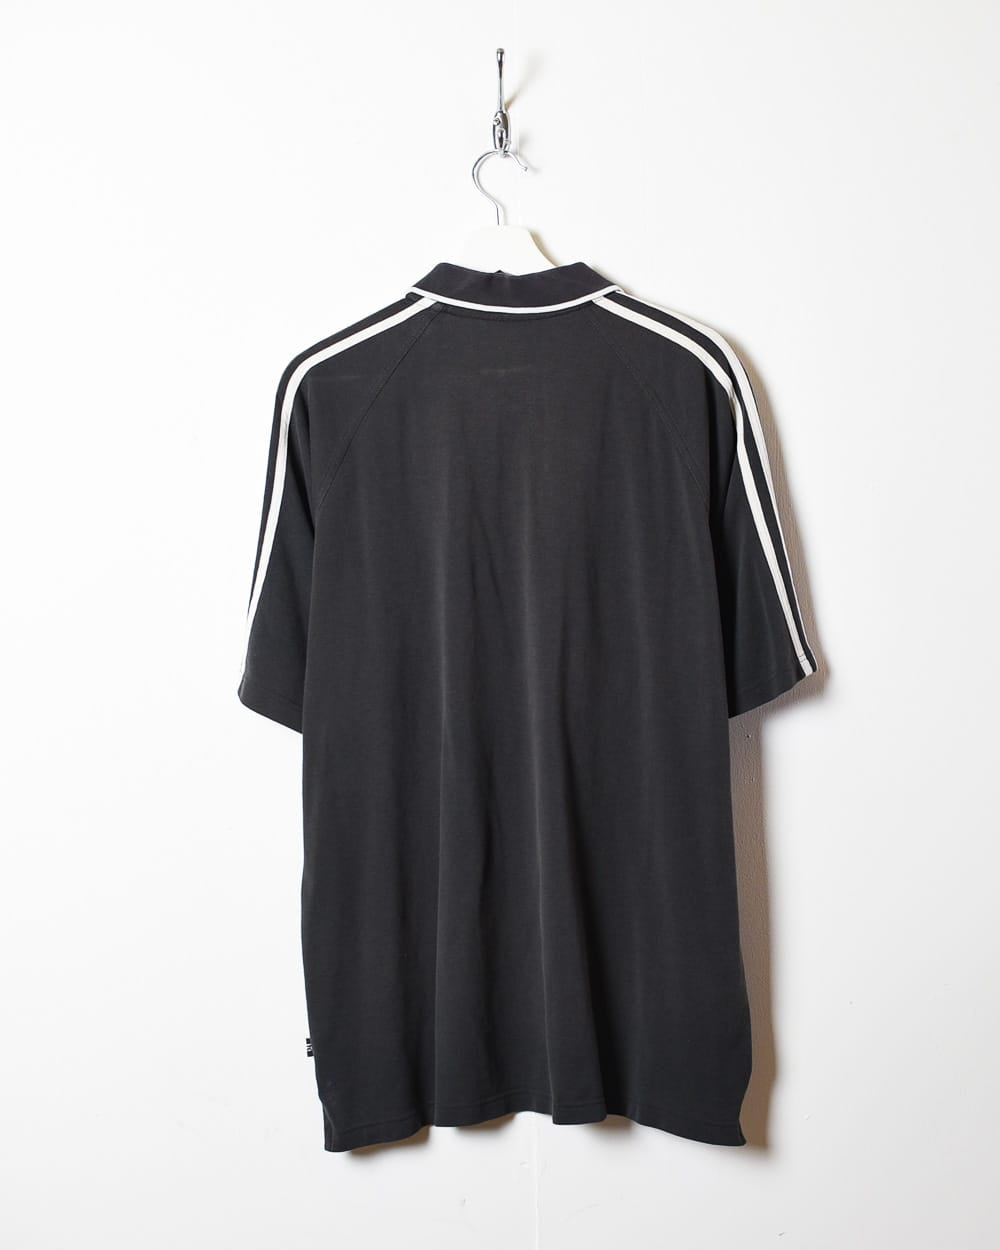 Black Adidas Polo Shirt - Large